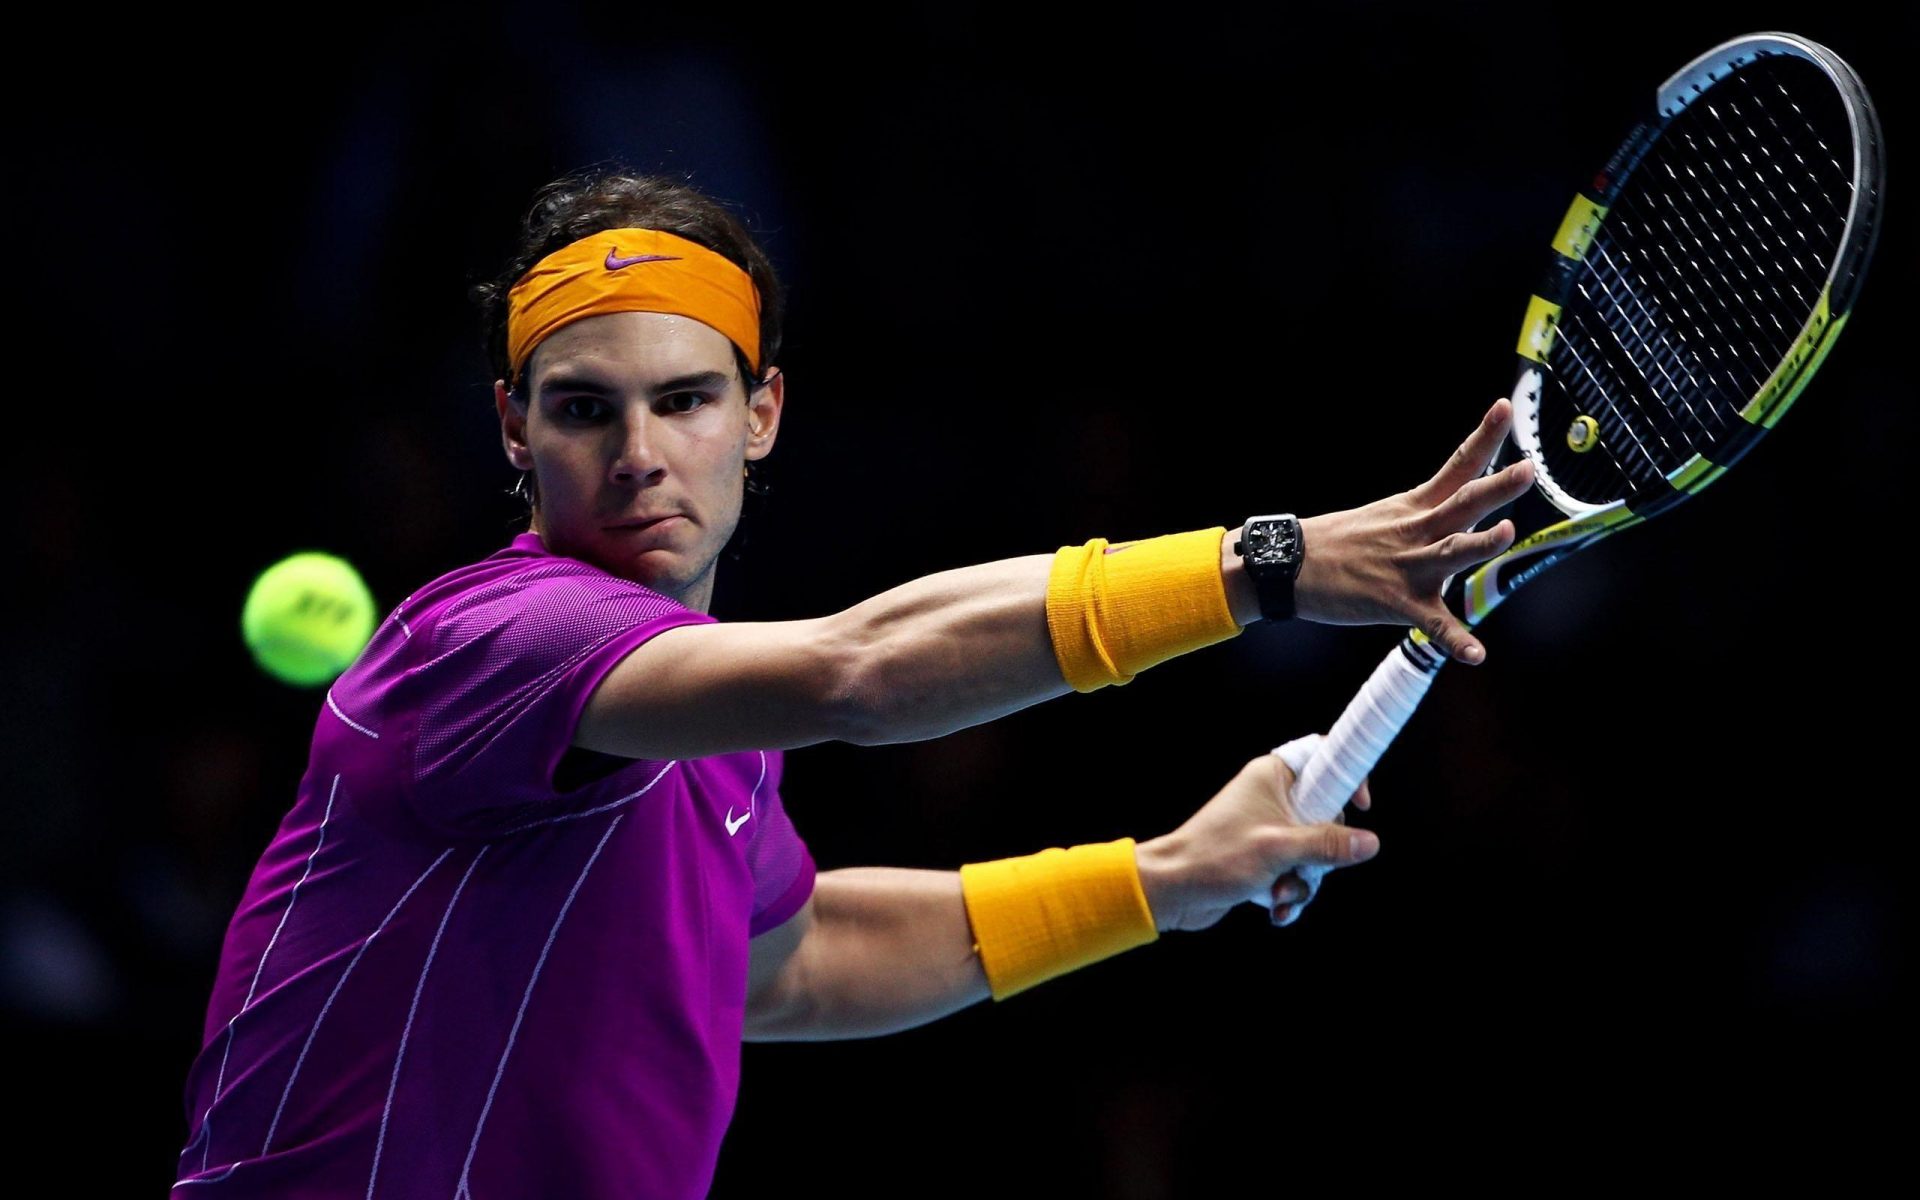 20 Time Grand Slam Champion Rafael Nadal